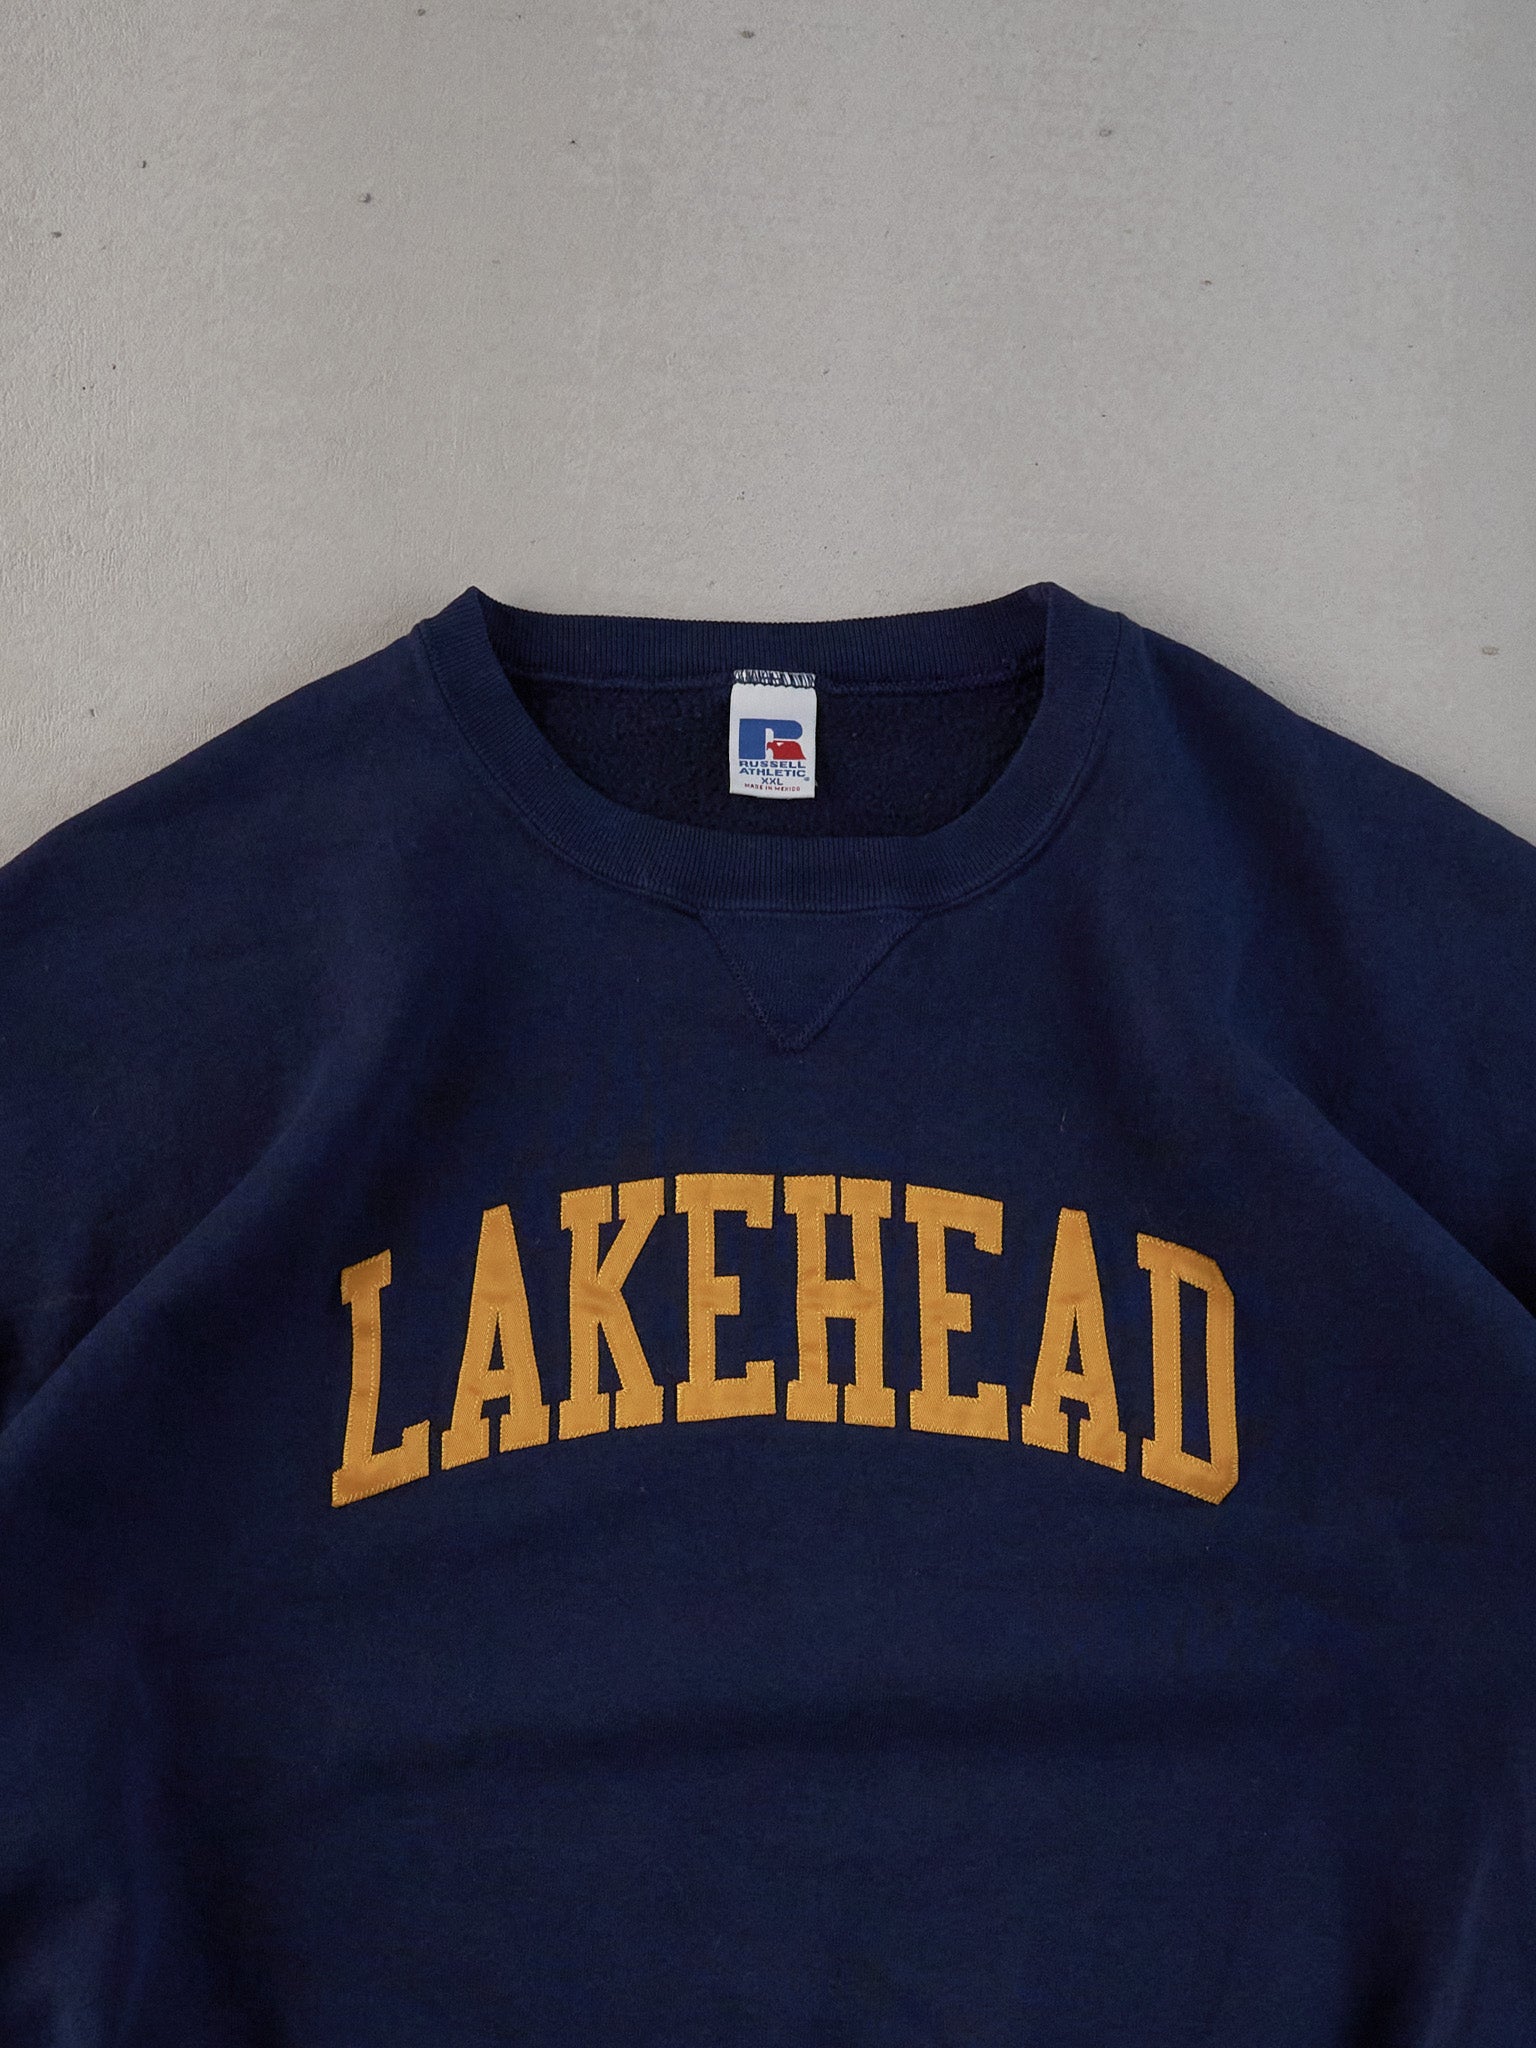 Vintage 90s Navy Blue Russell Athletics X Lakehead Crewneck (L)